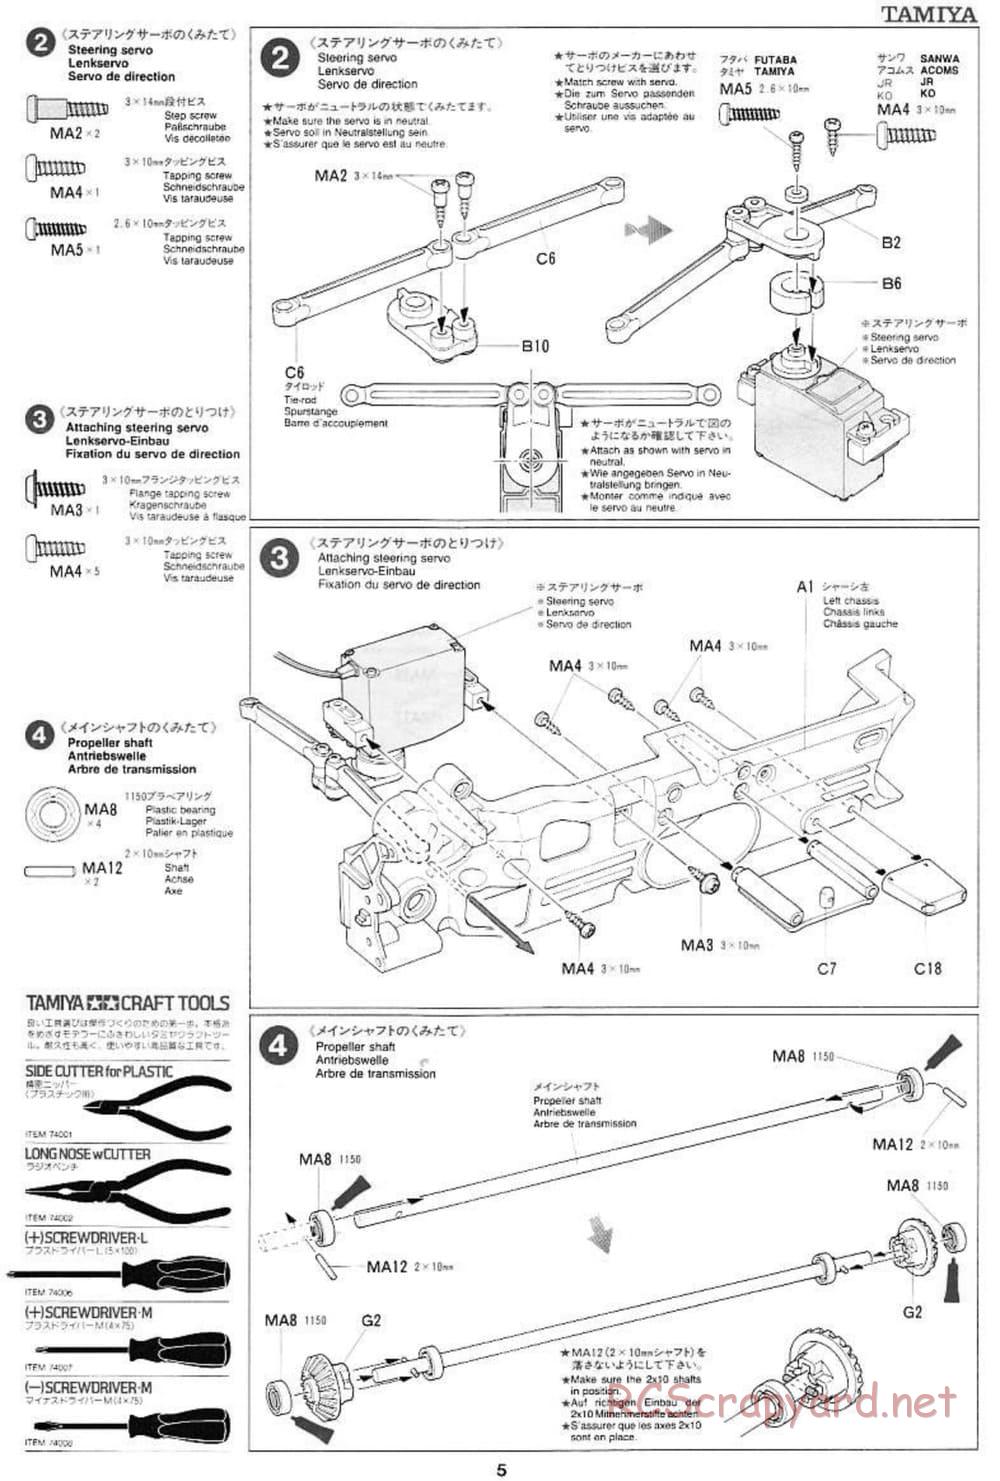 Tamiya - Ford SVT F-150 Lightning - TL-01 Chassis - Manual - Page 5